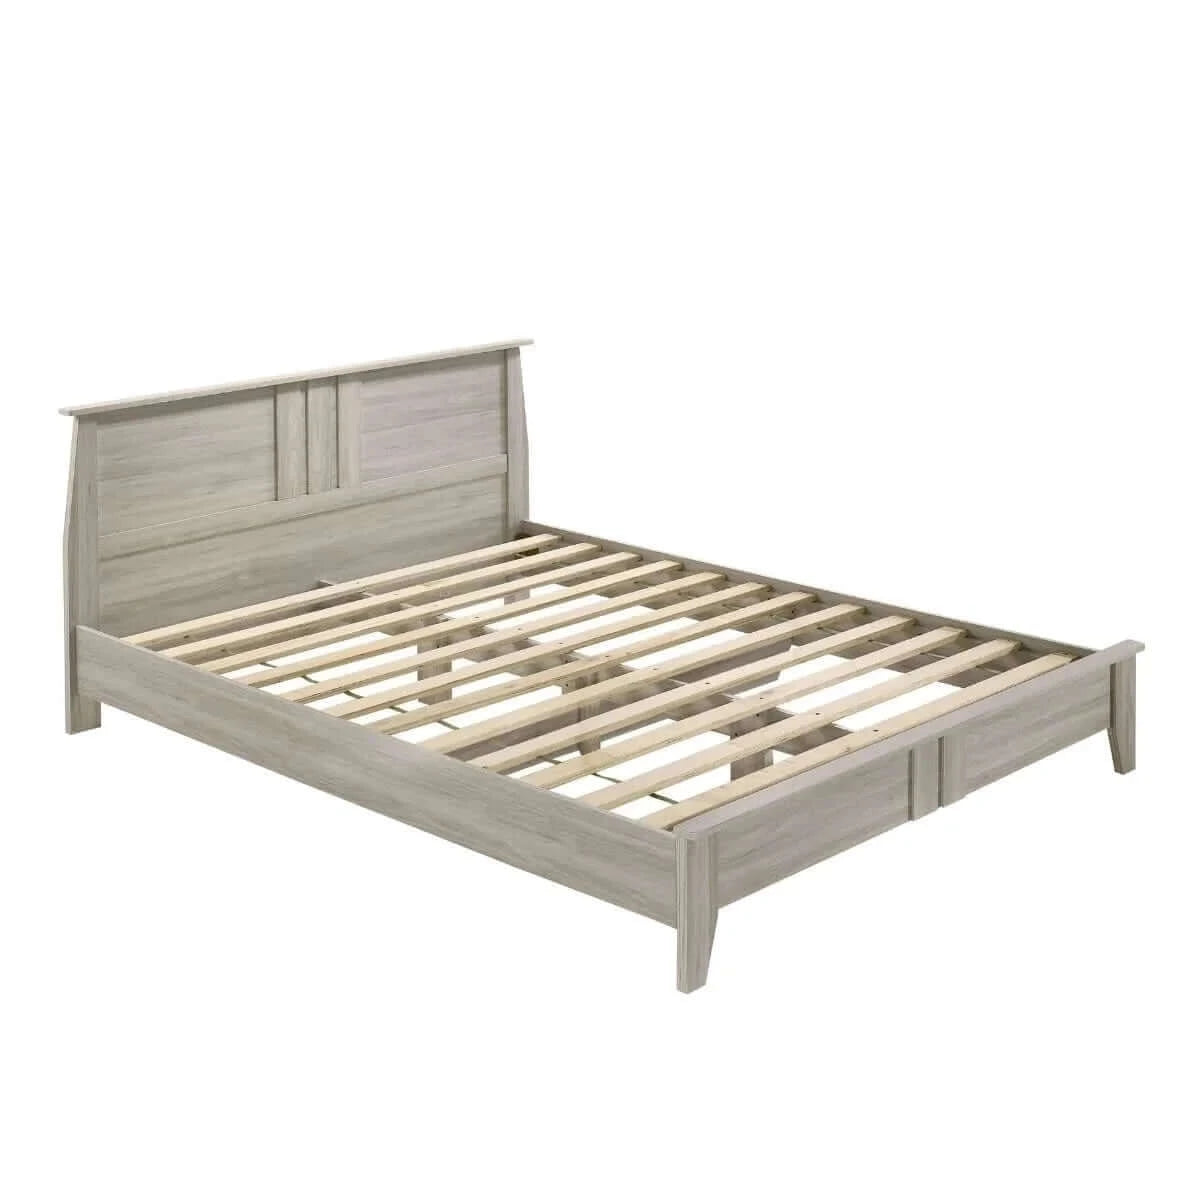 Buy queen wooden bed frame base - upinteriors-Upinteriors